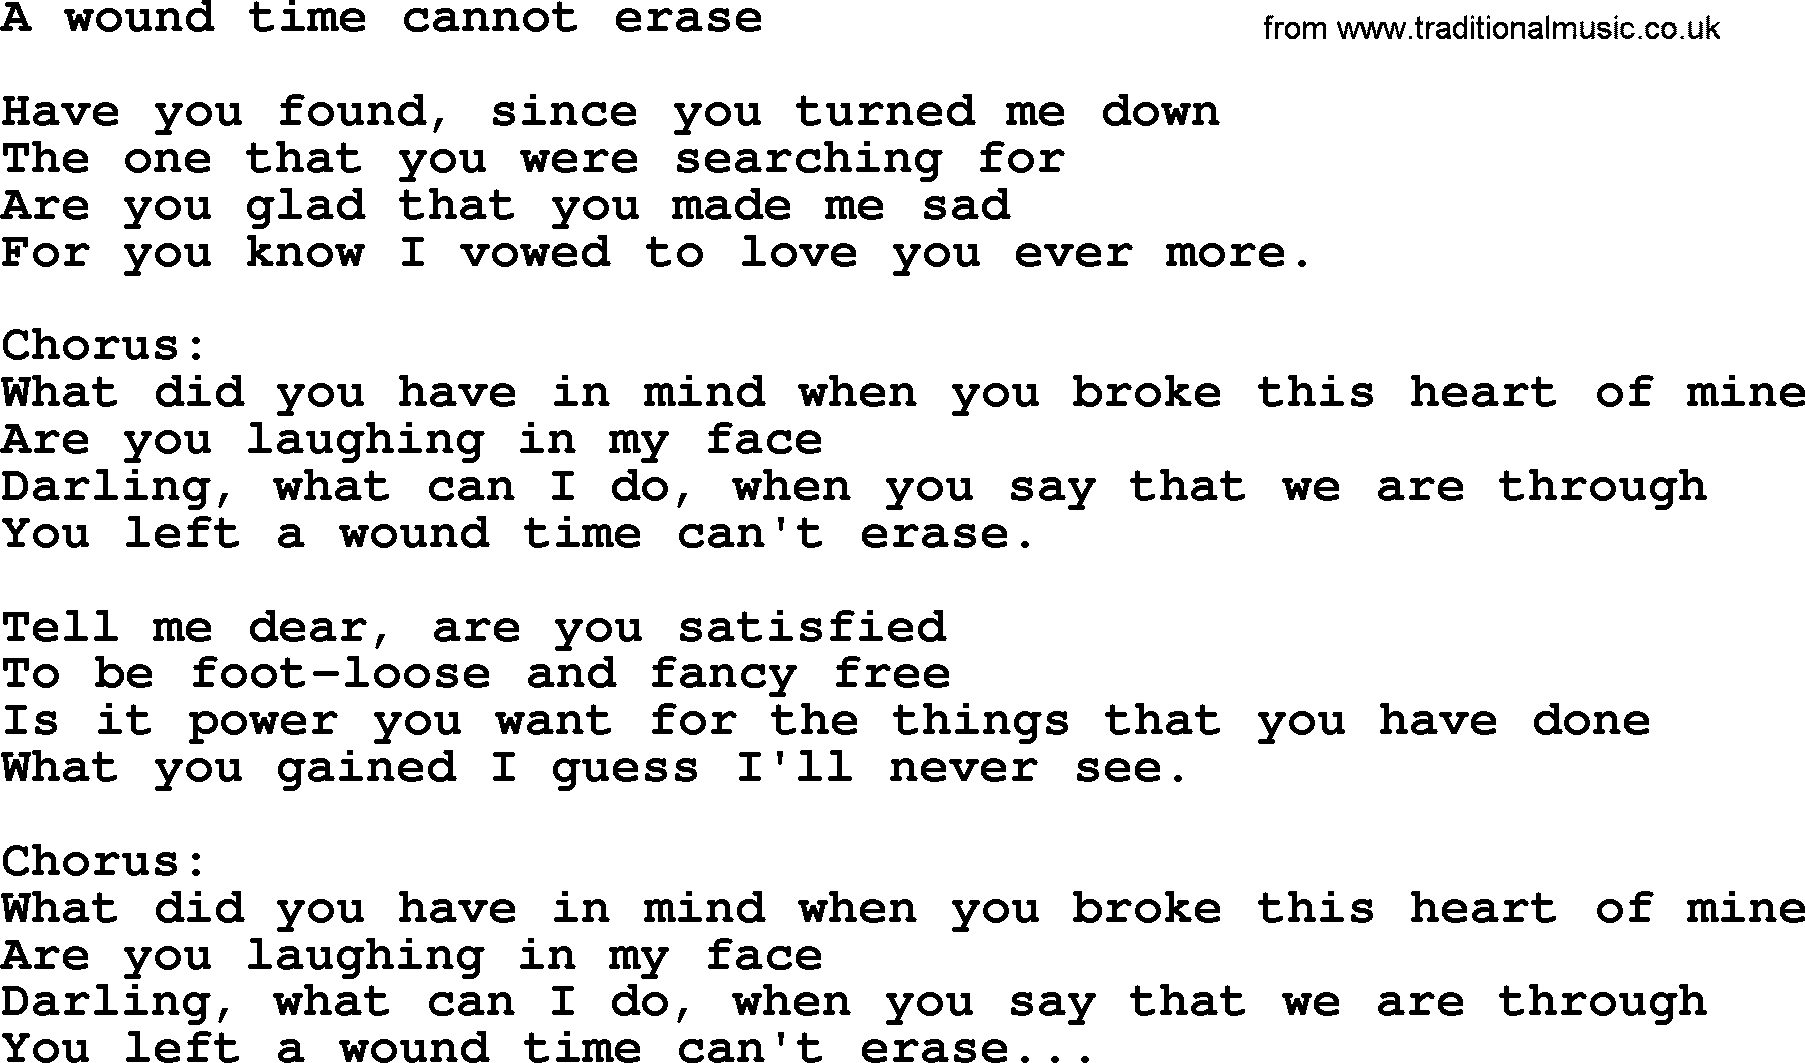 George Jones song: A Wound Time Cannot Erase, lyrics